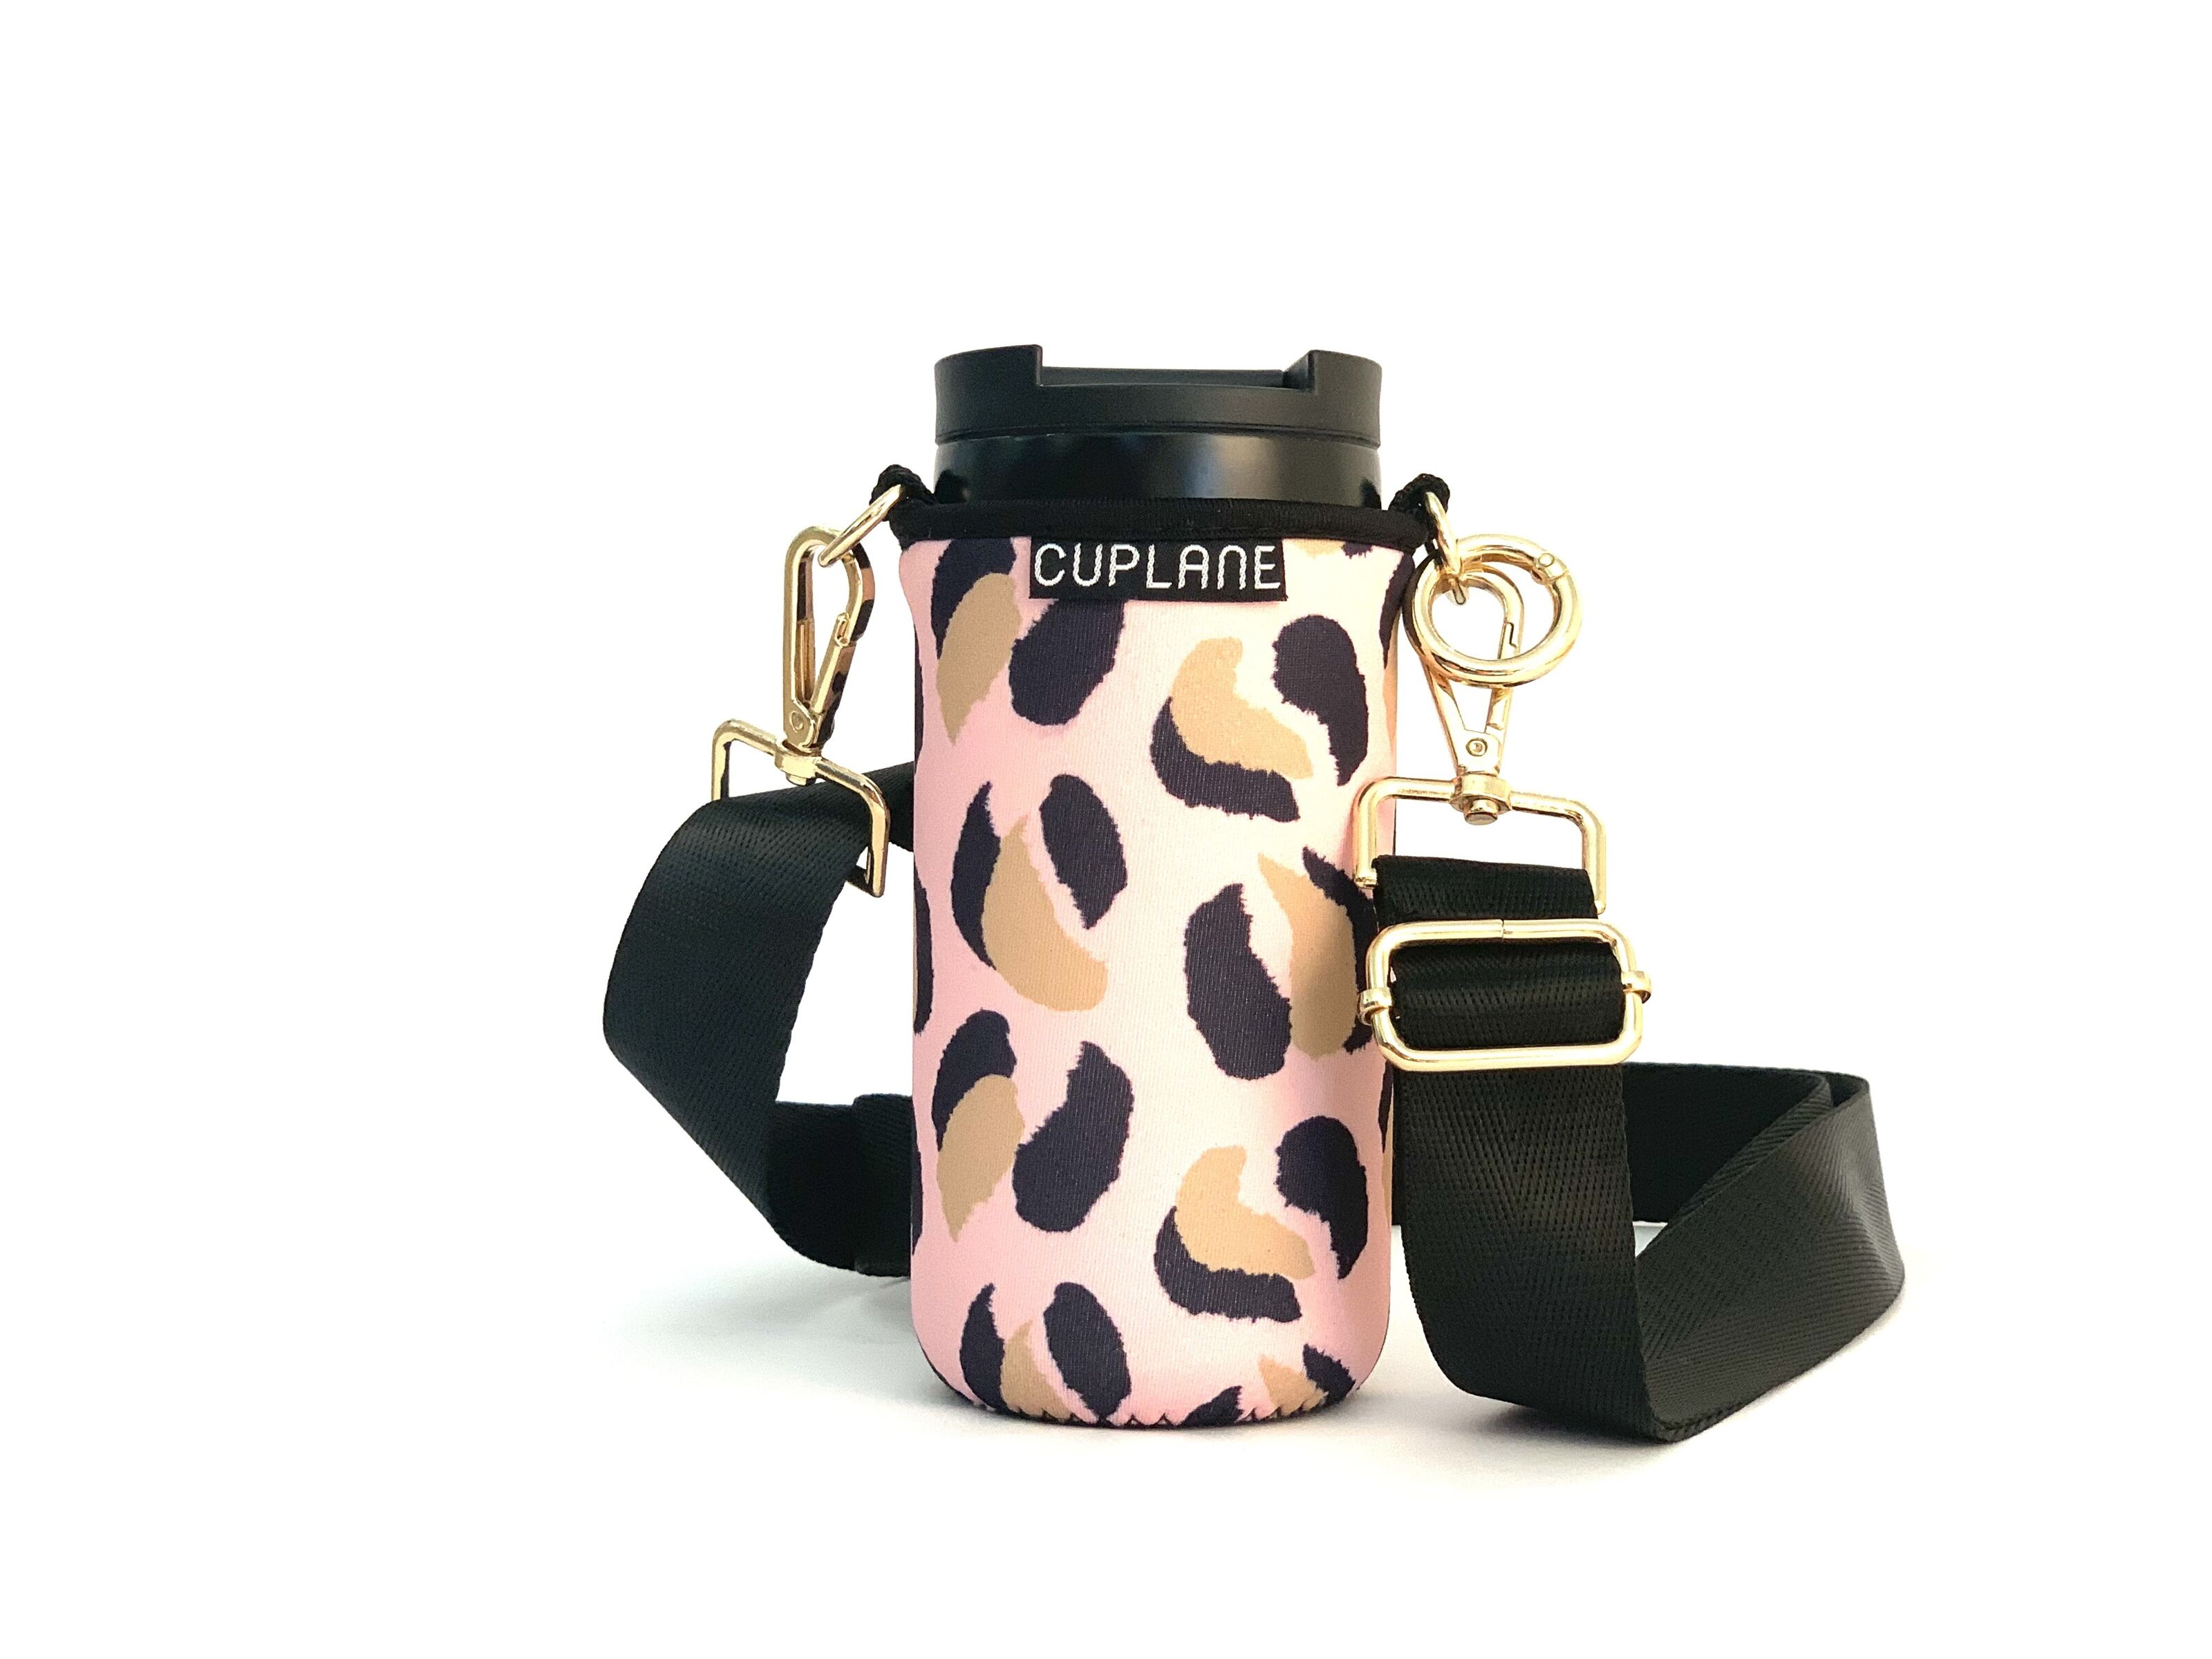 Ankorstore x Cuplane - Becherhalter To Go Set CUPLANE Pink Leo Sleeve,  Black Cup & Black Strap